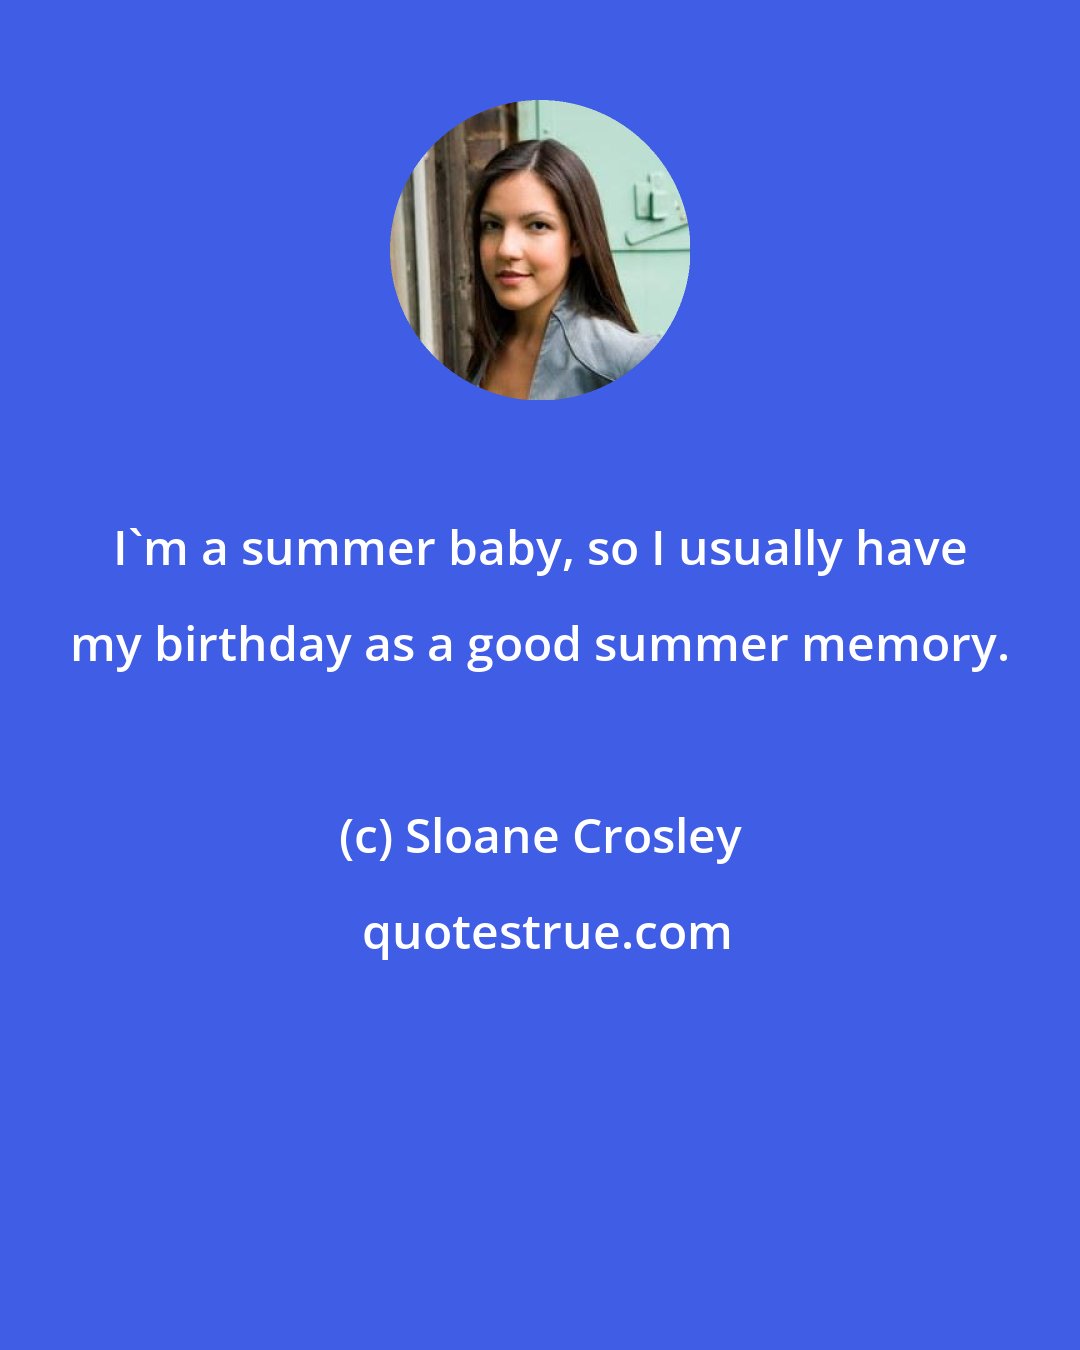 Sloane Crosley: I'm a summer baby, so I usually have my birthday as a good summer memory.